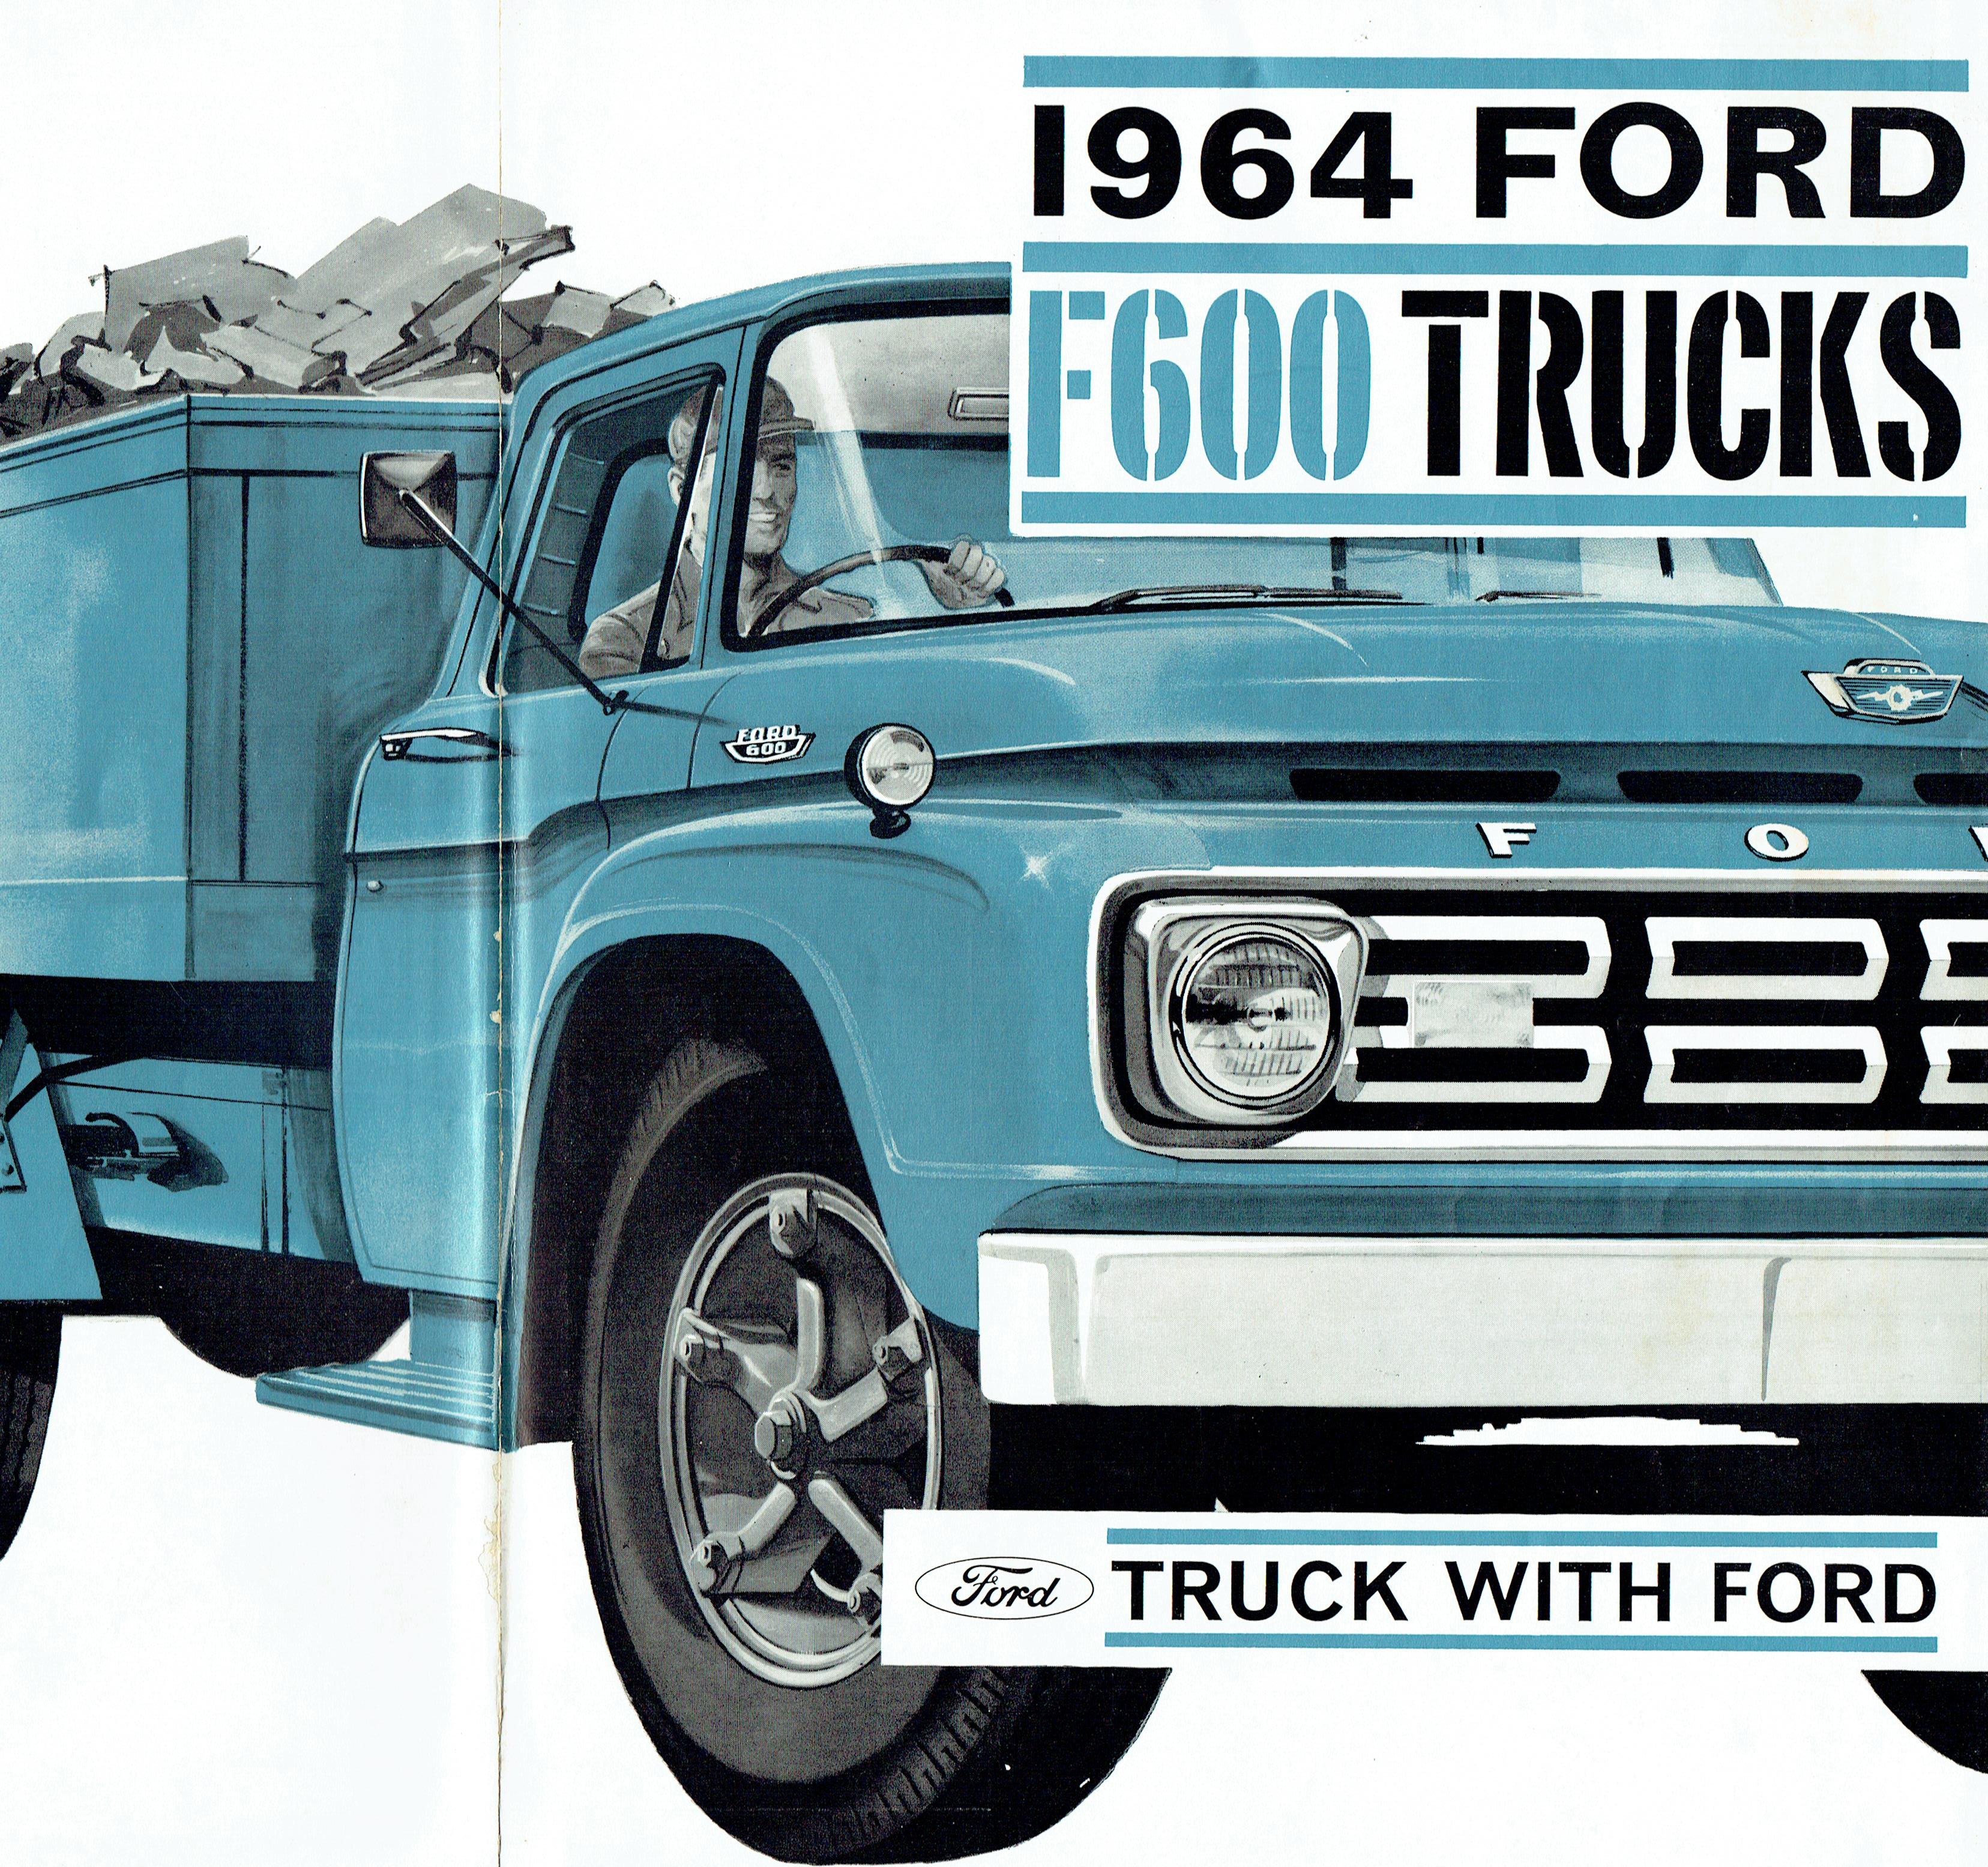 1964 Ford F600 - Australia page_01